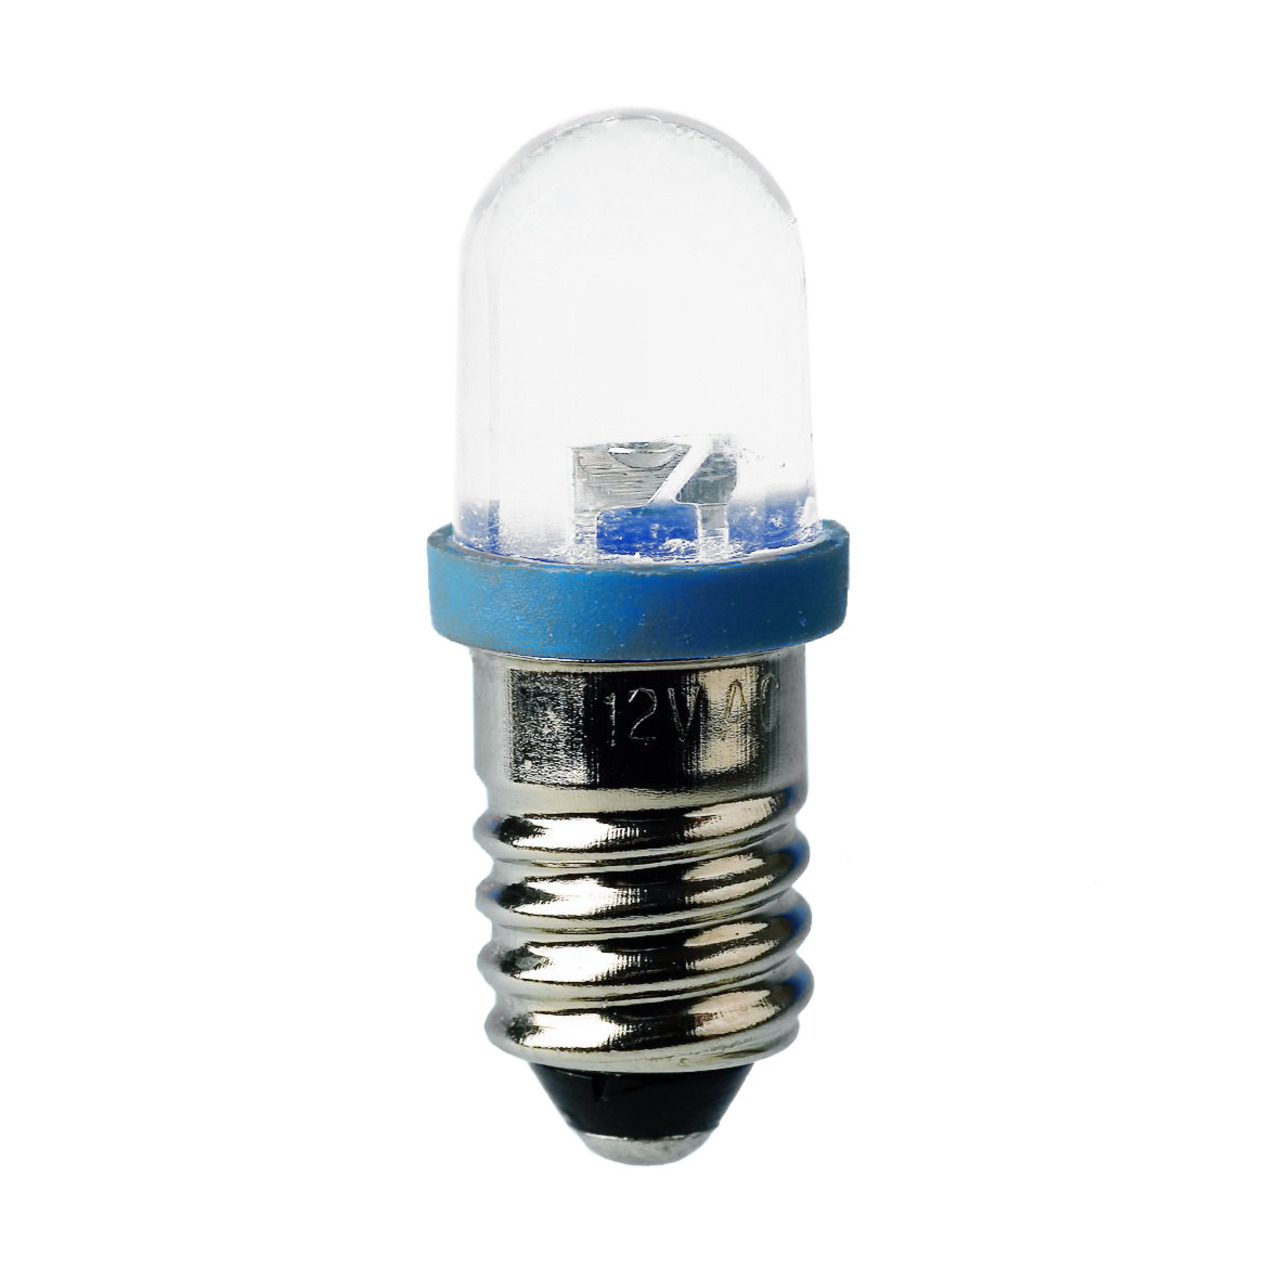 Barthelme LED-Lampe E10 mit Brckengleichrichter- 10 x 28 mm- 230 V- warmweiss